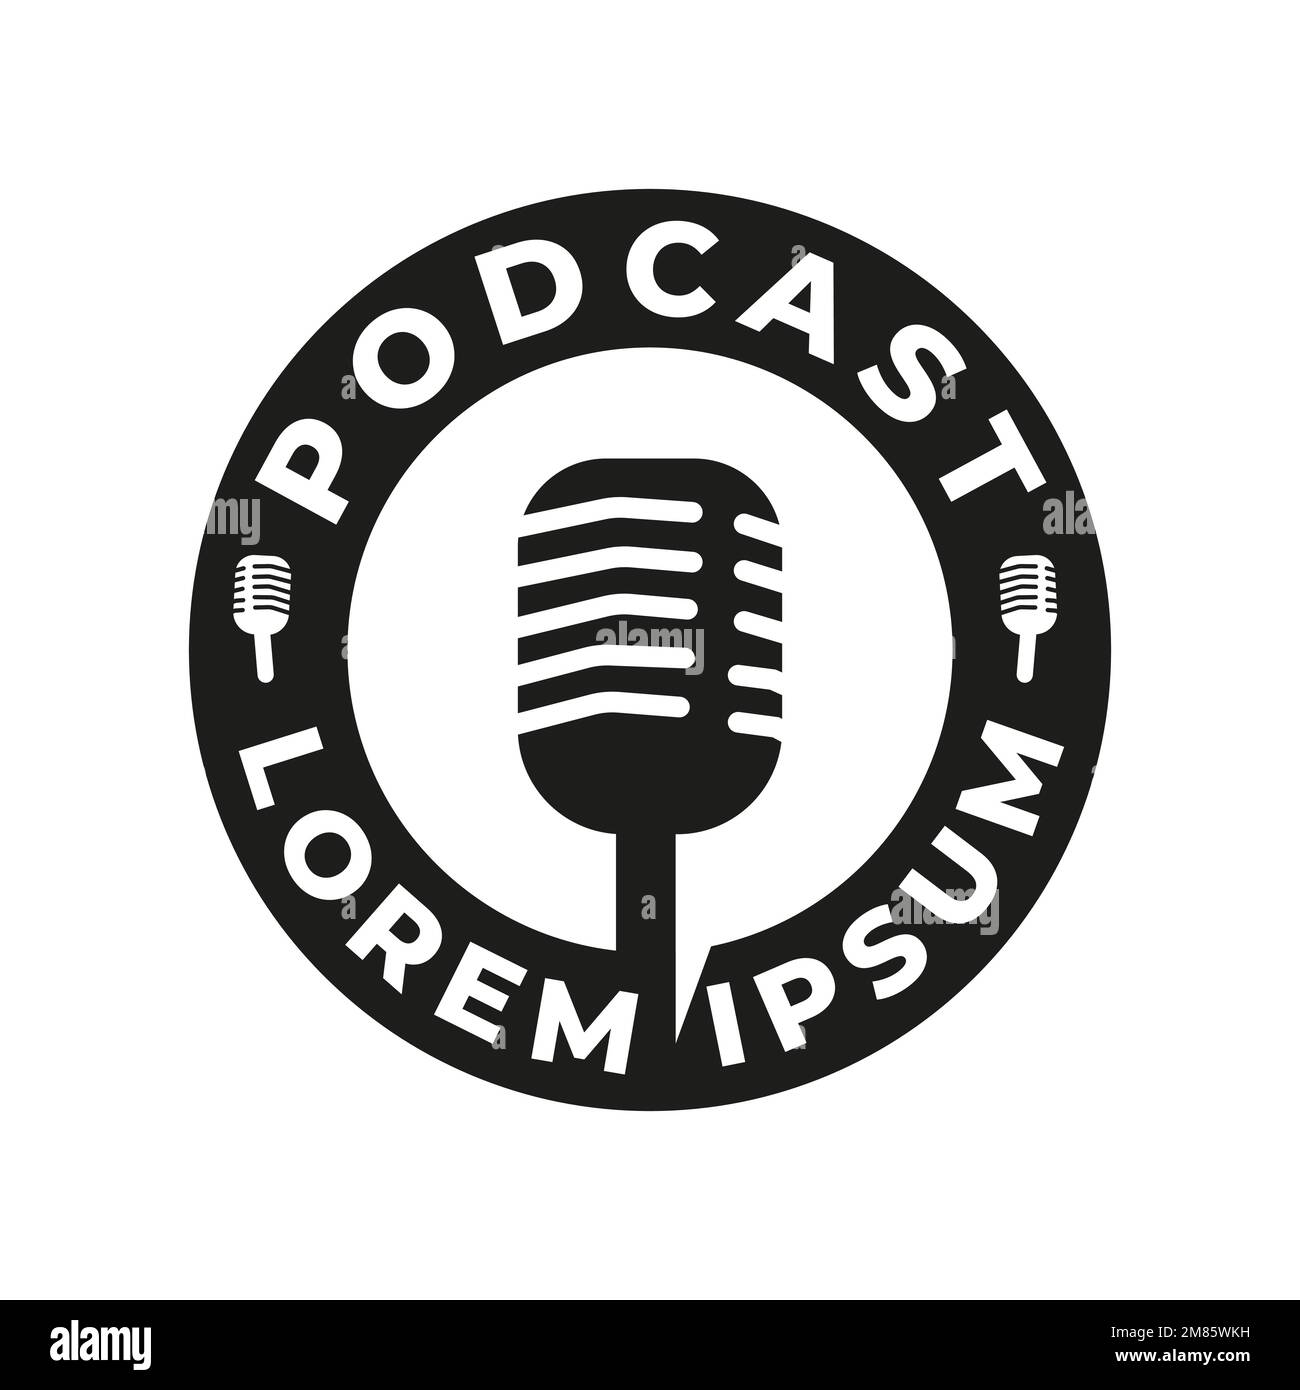 Podcast mic logo icono vector diseño de dibujos animados de micrófono retro